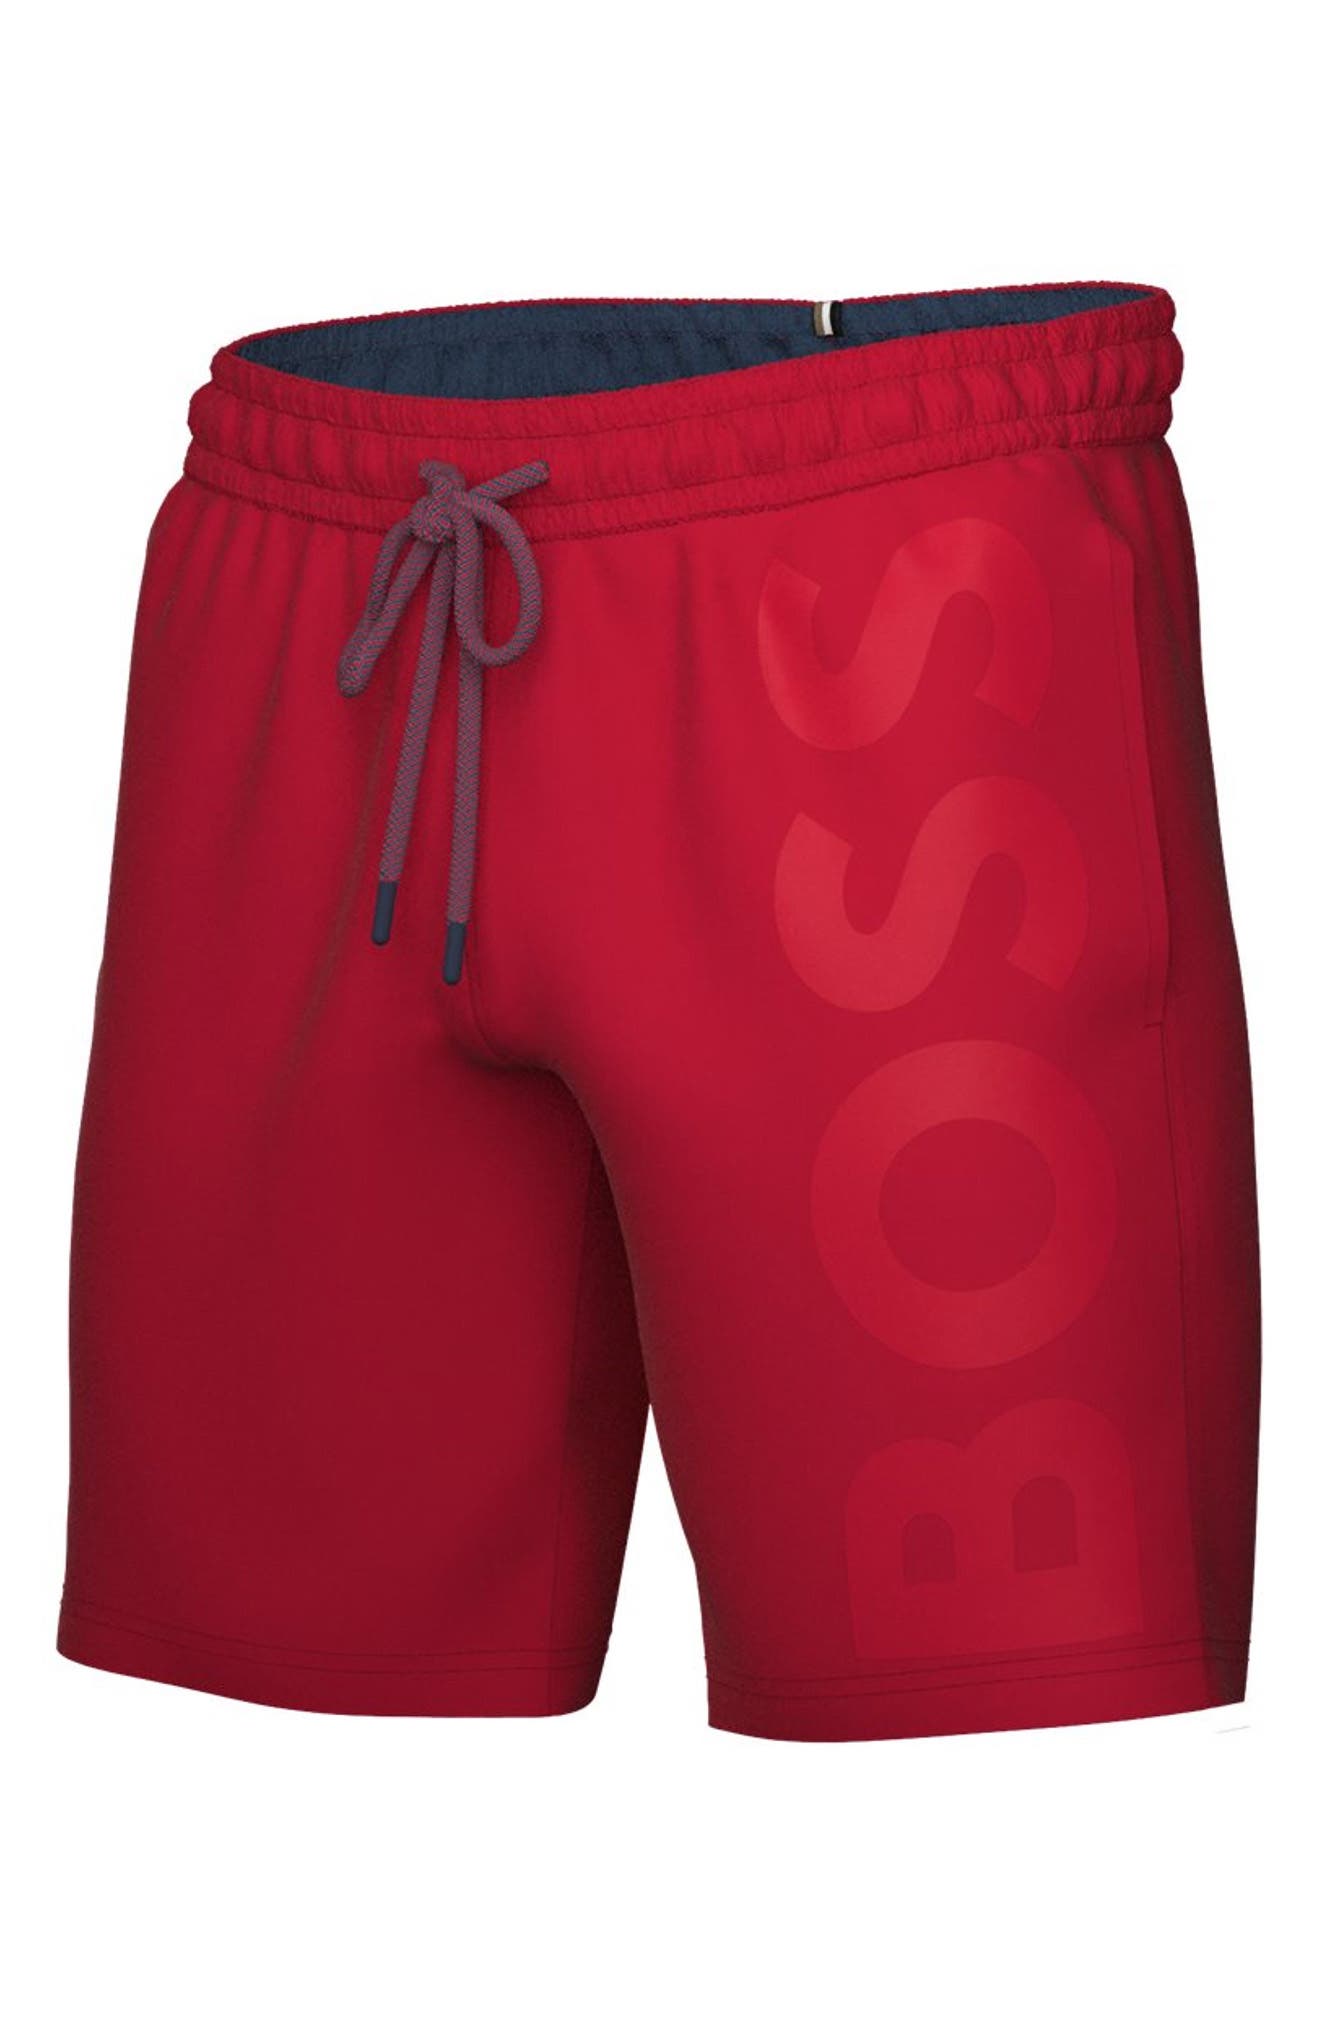 BOSS Orca Logo Swim Trunks in Bright Red